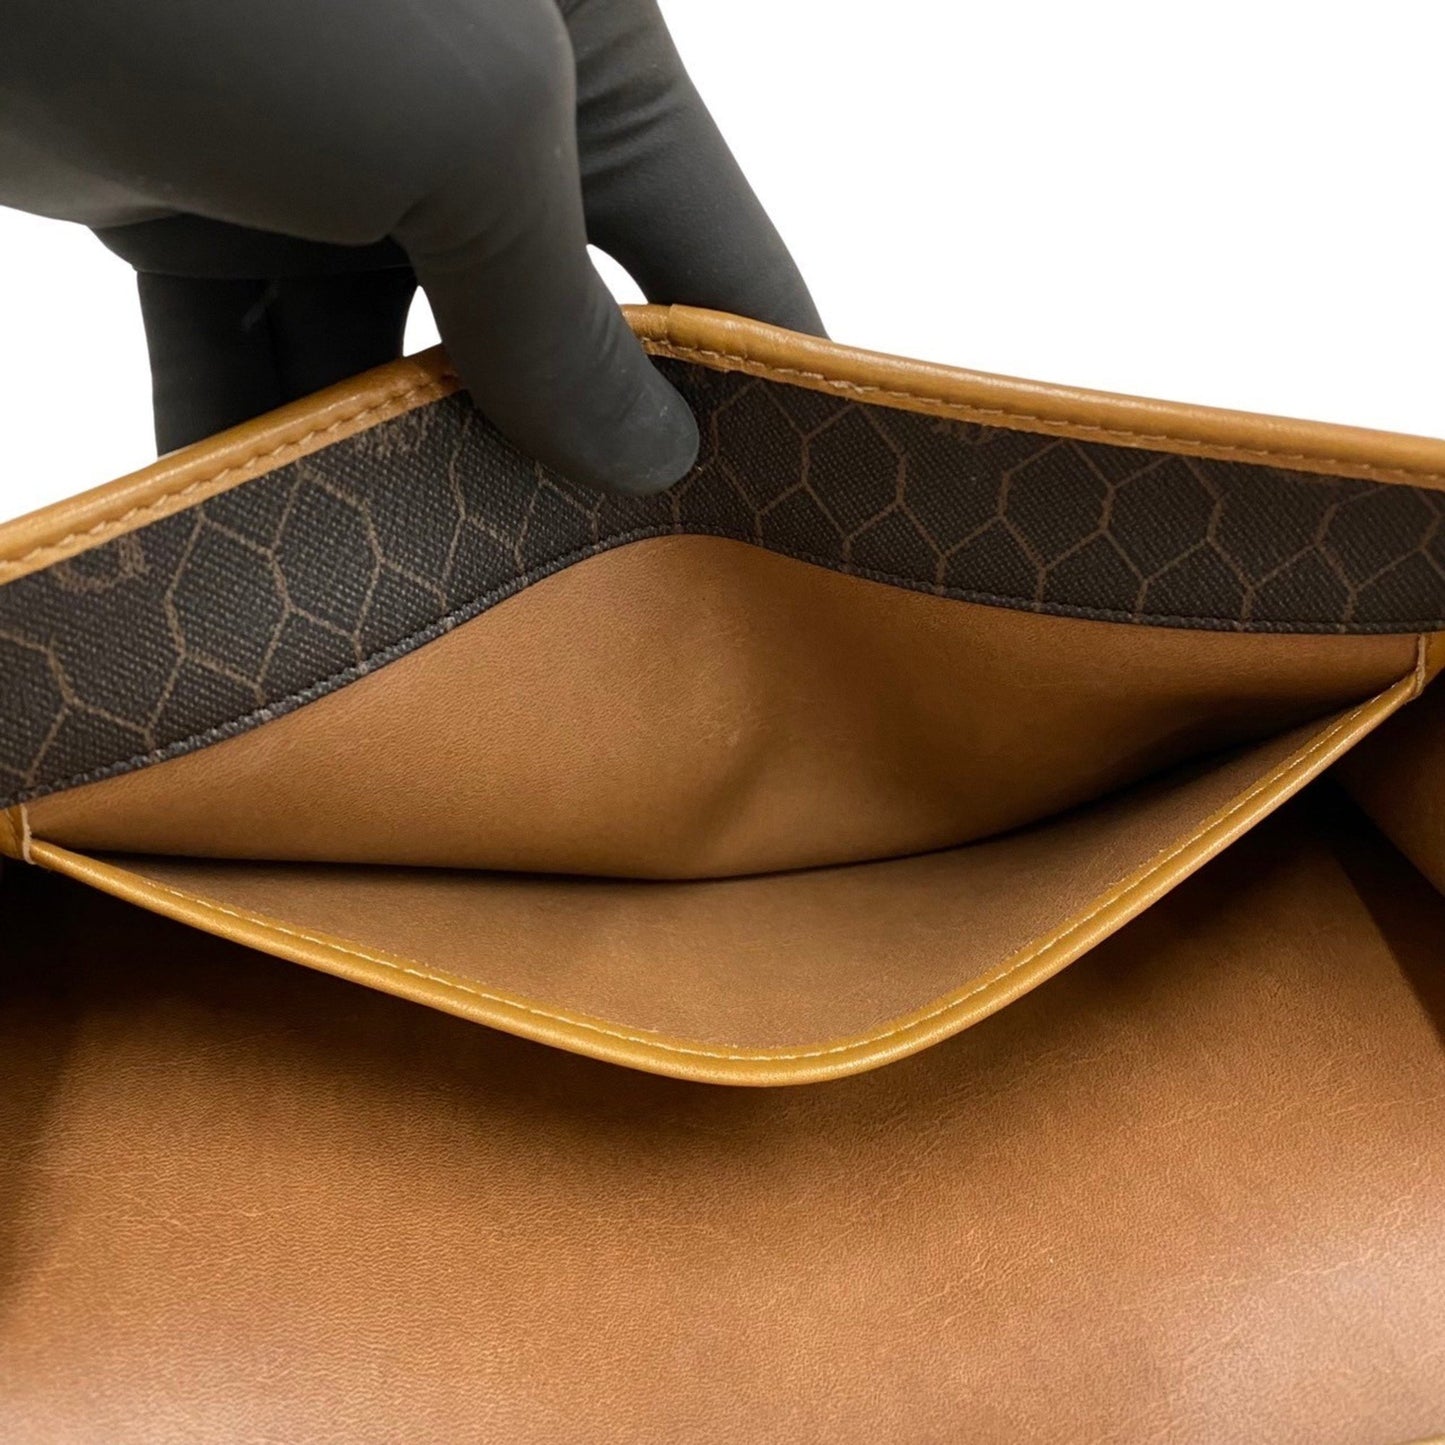 Dior Women's Elegant Canvas Honeycomb Bag in Brown